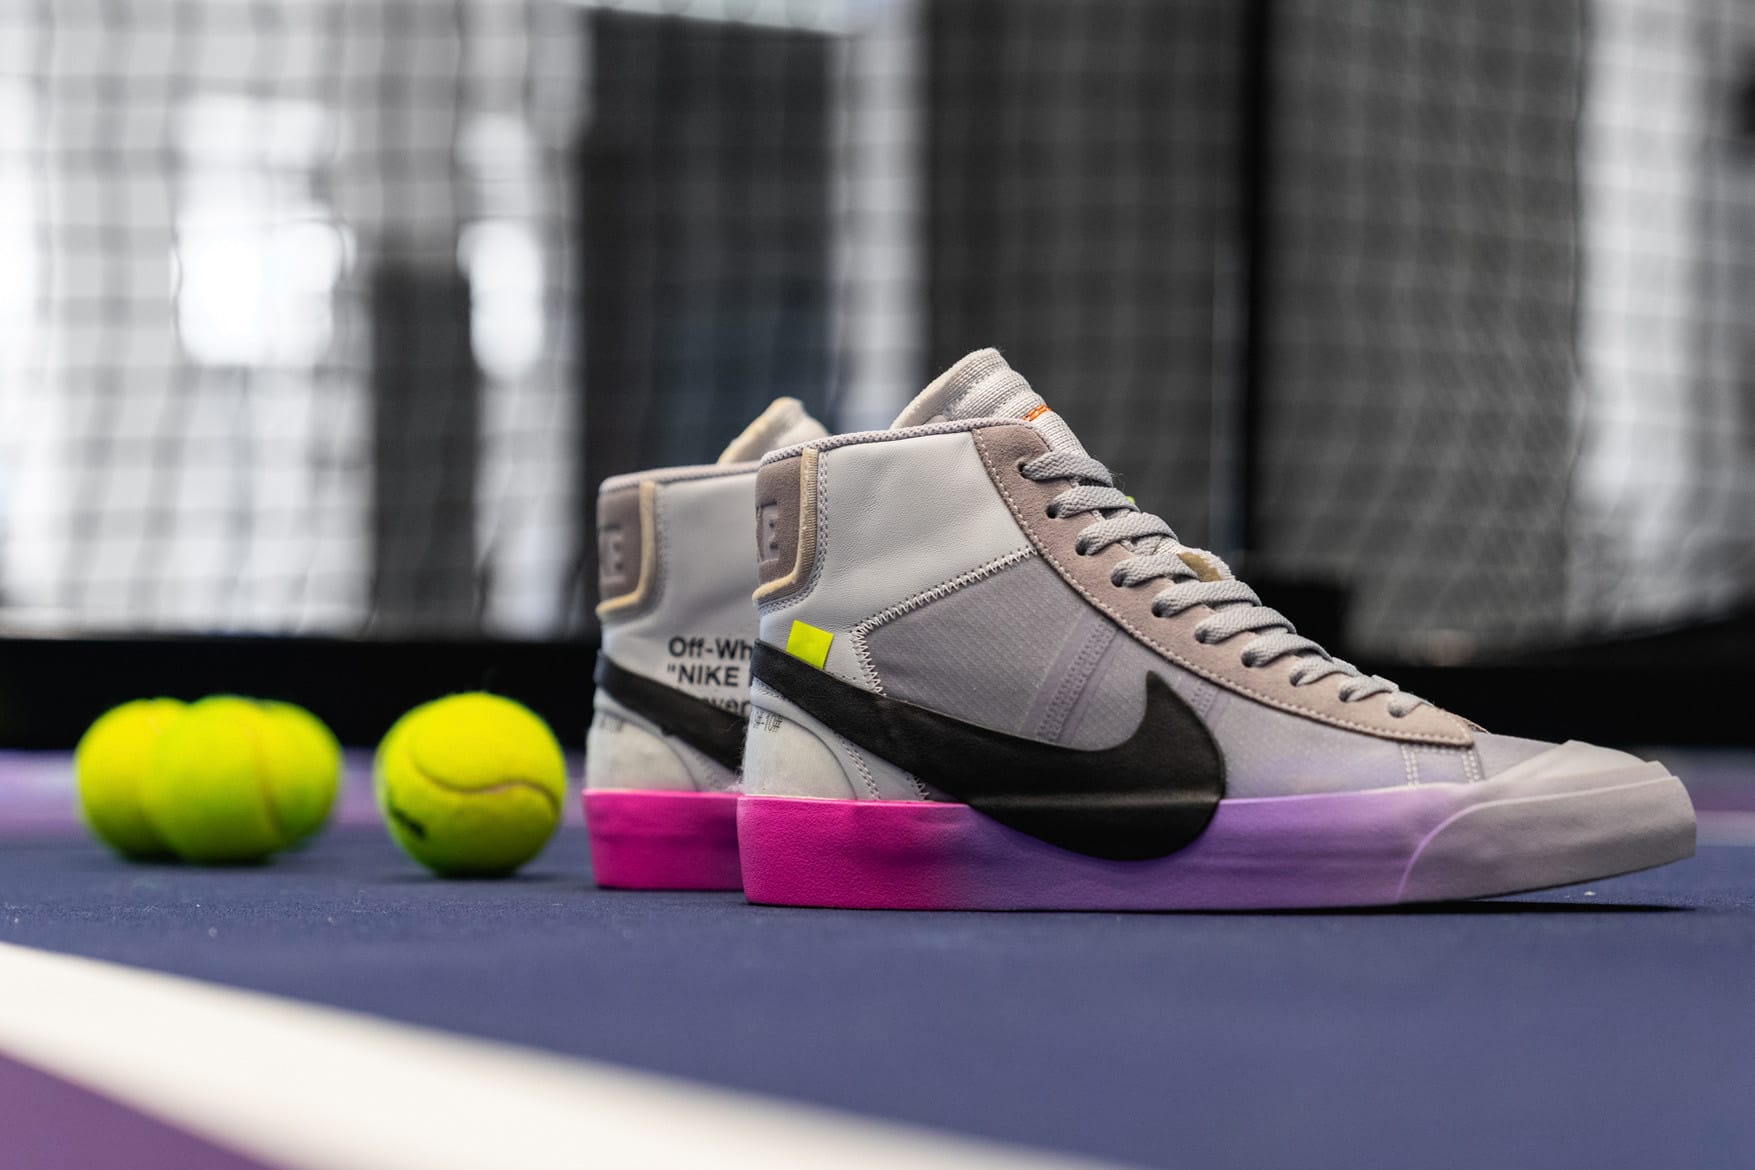 Serena Williams' Off-White x Nike 